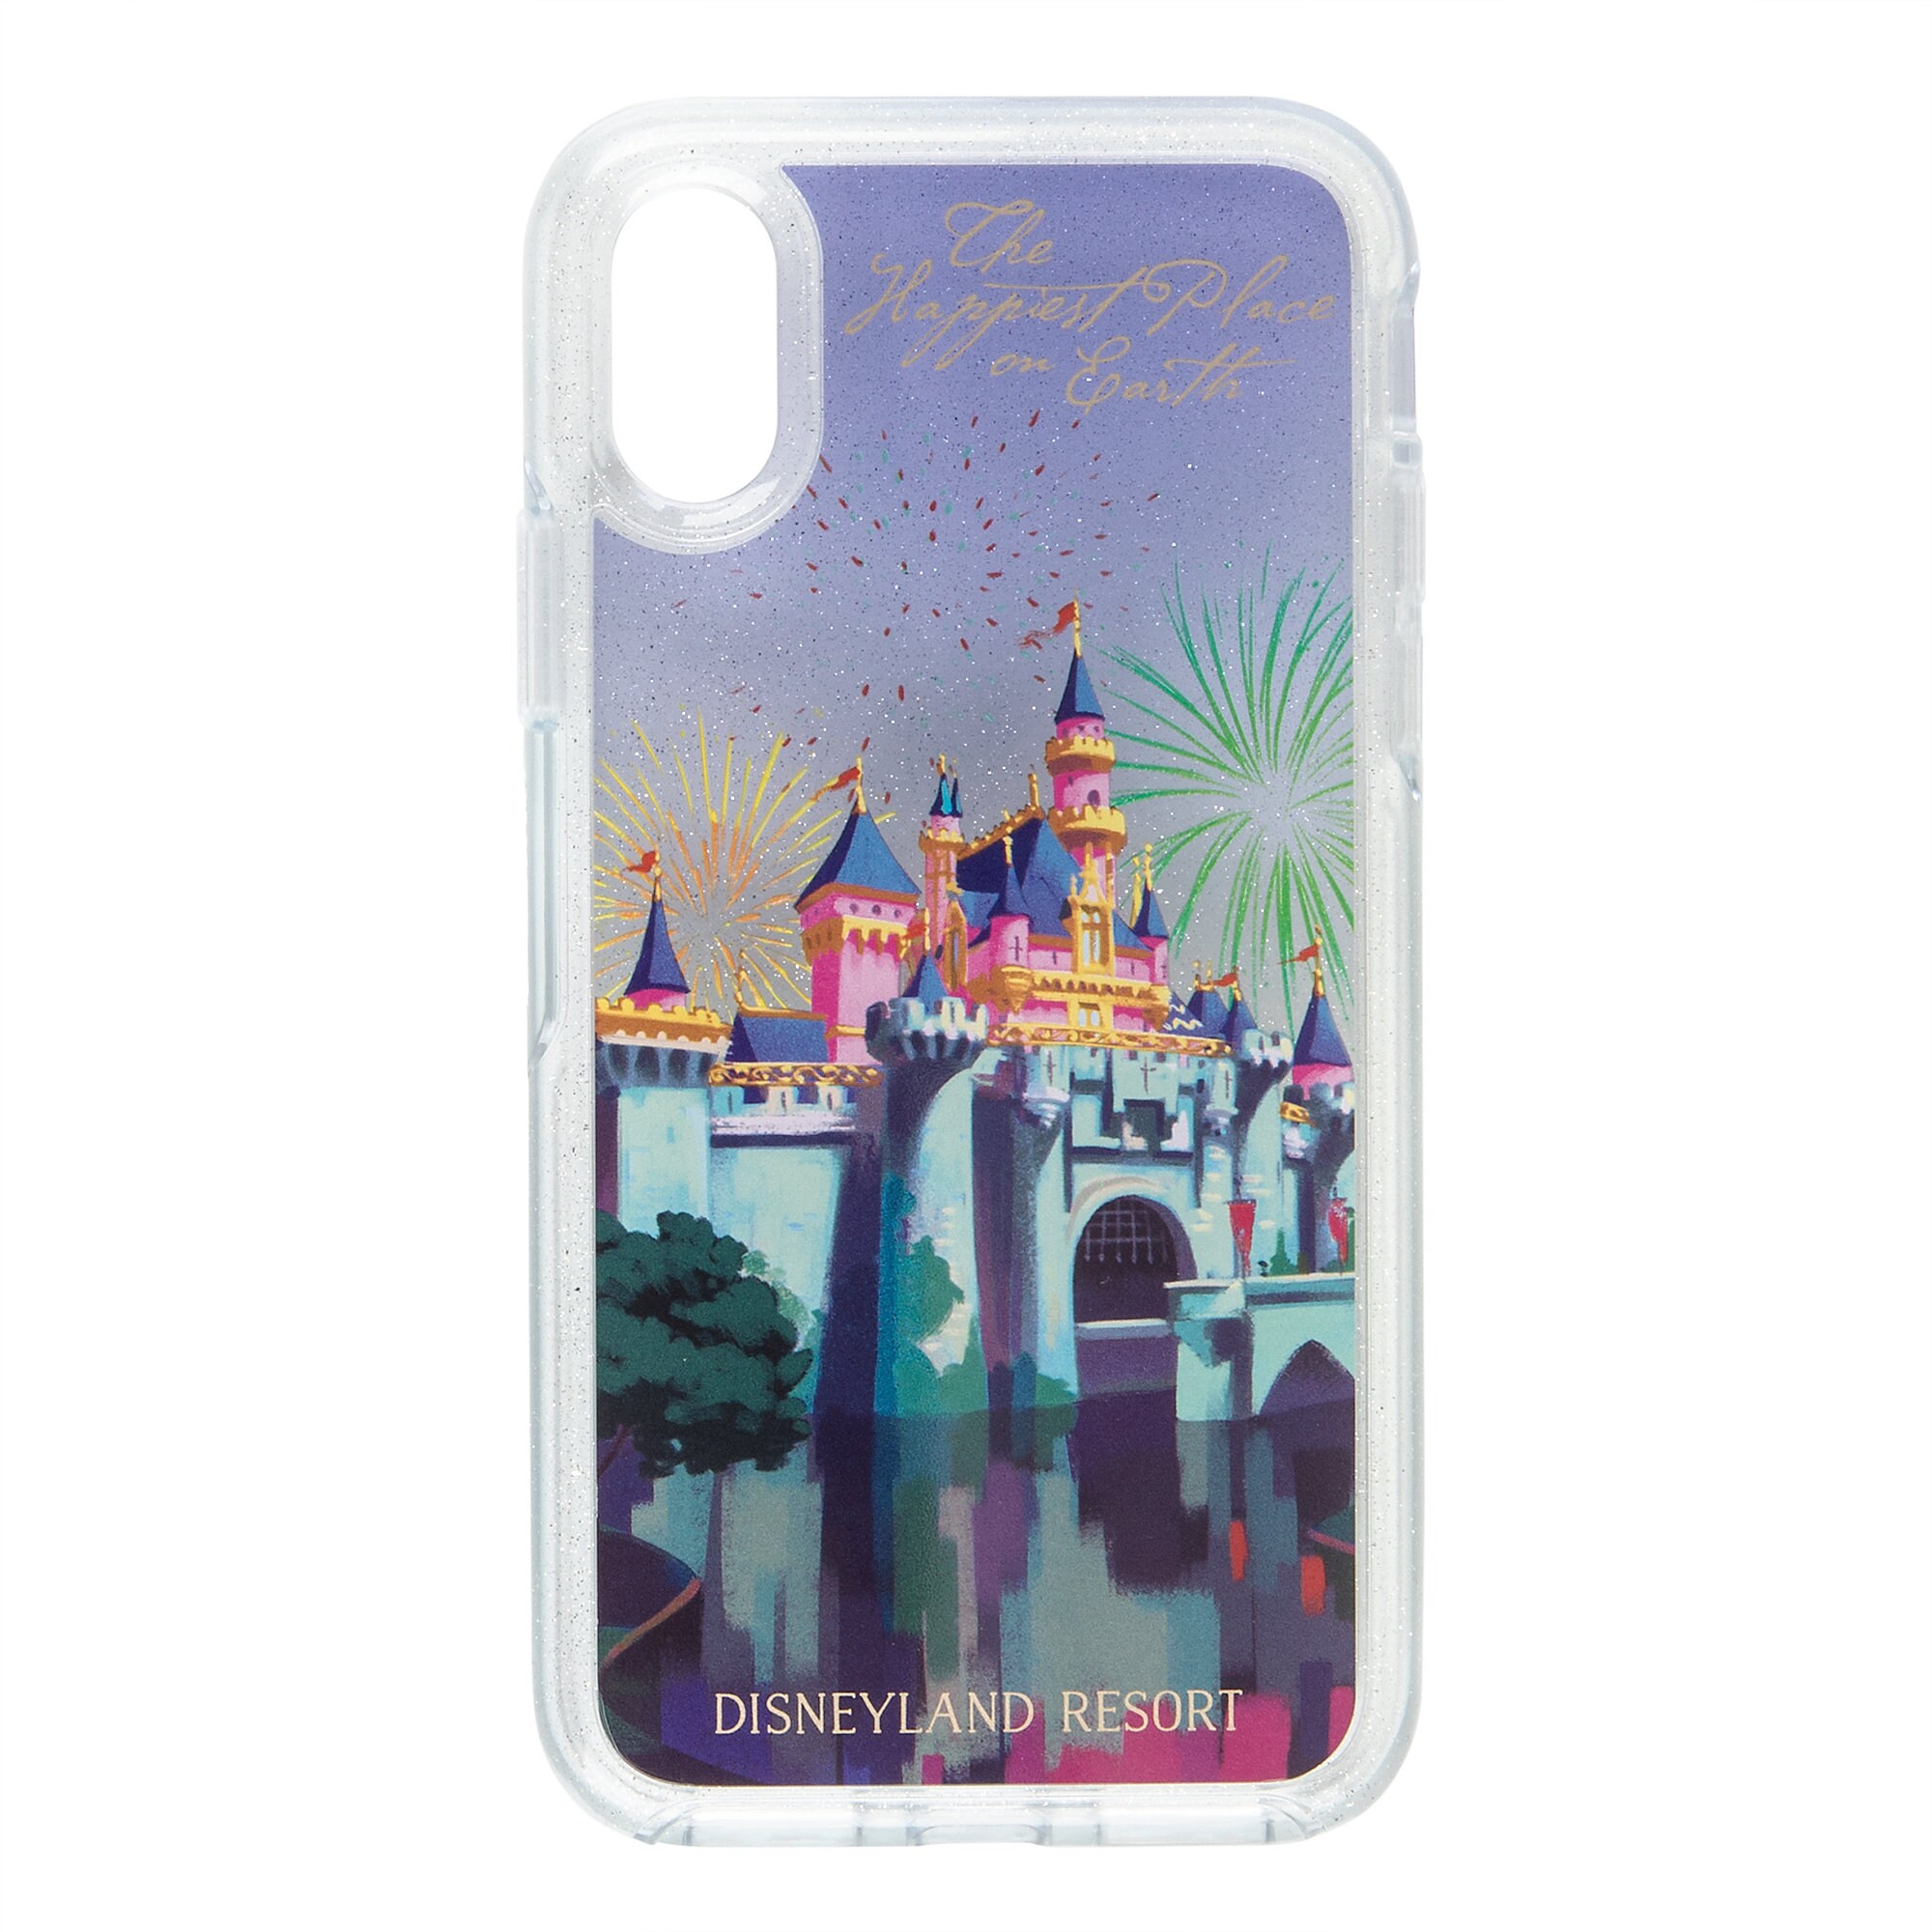 Sleeping Beauty Castle iPhone X/Xs Case by OtterBox - Disneyland